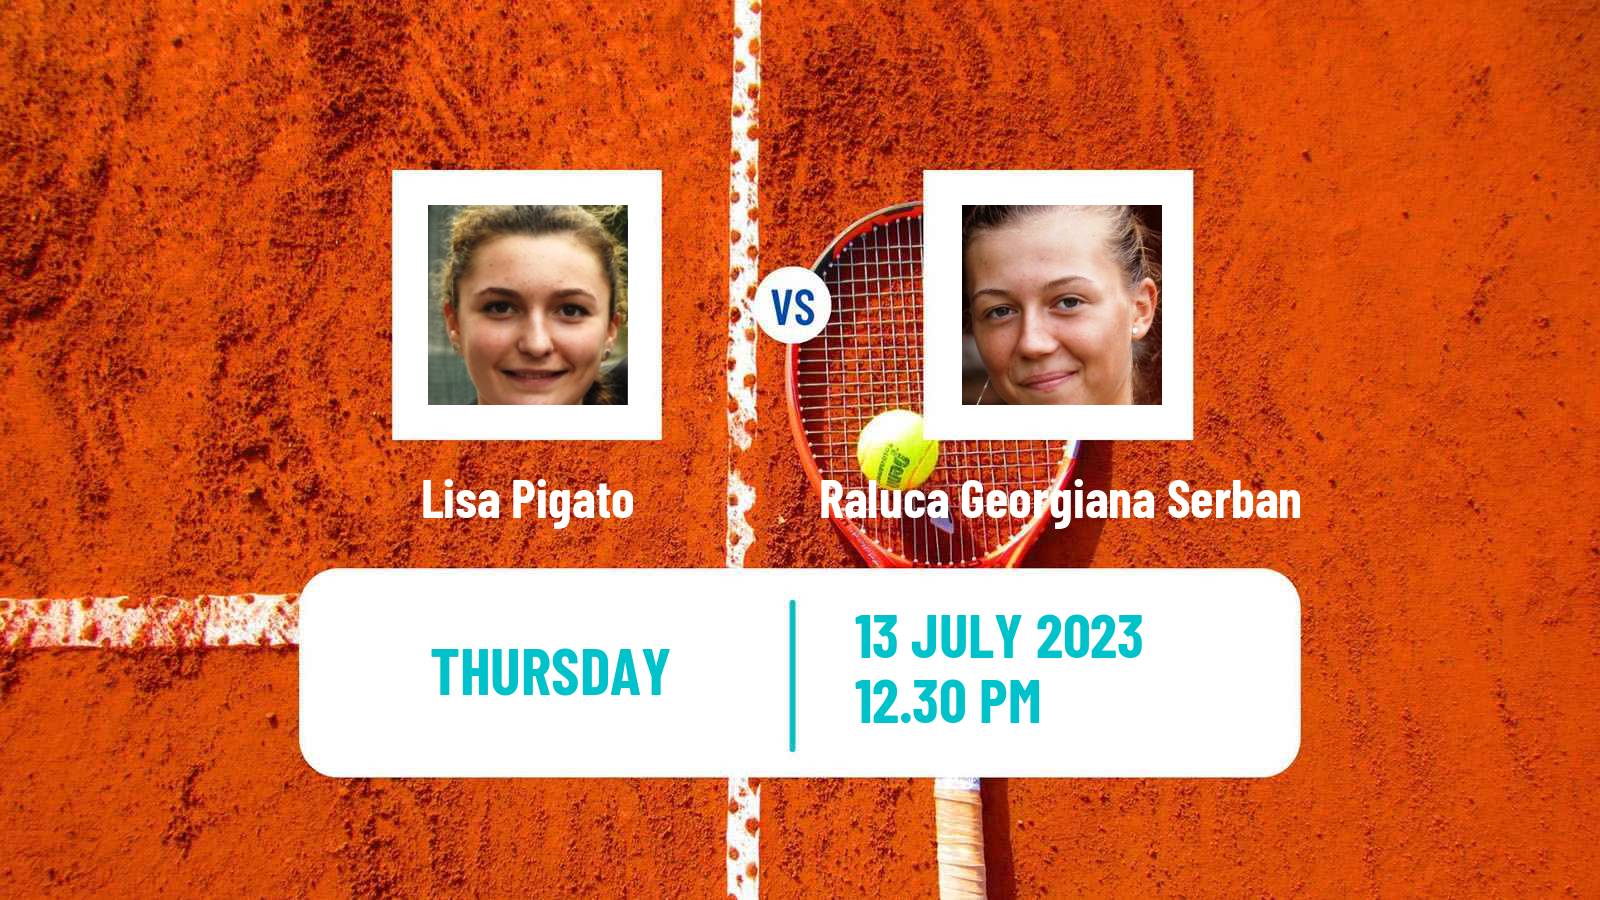 Tennis ITF W60 Rome 2 Women Lisa Pigato - Raluca Georgiana Serban